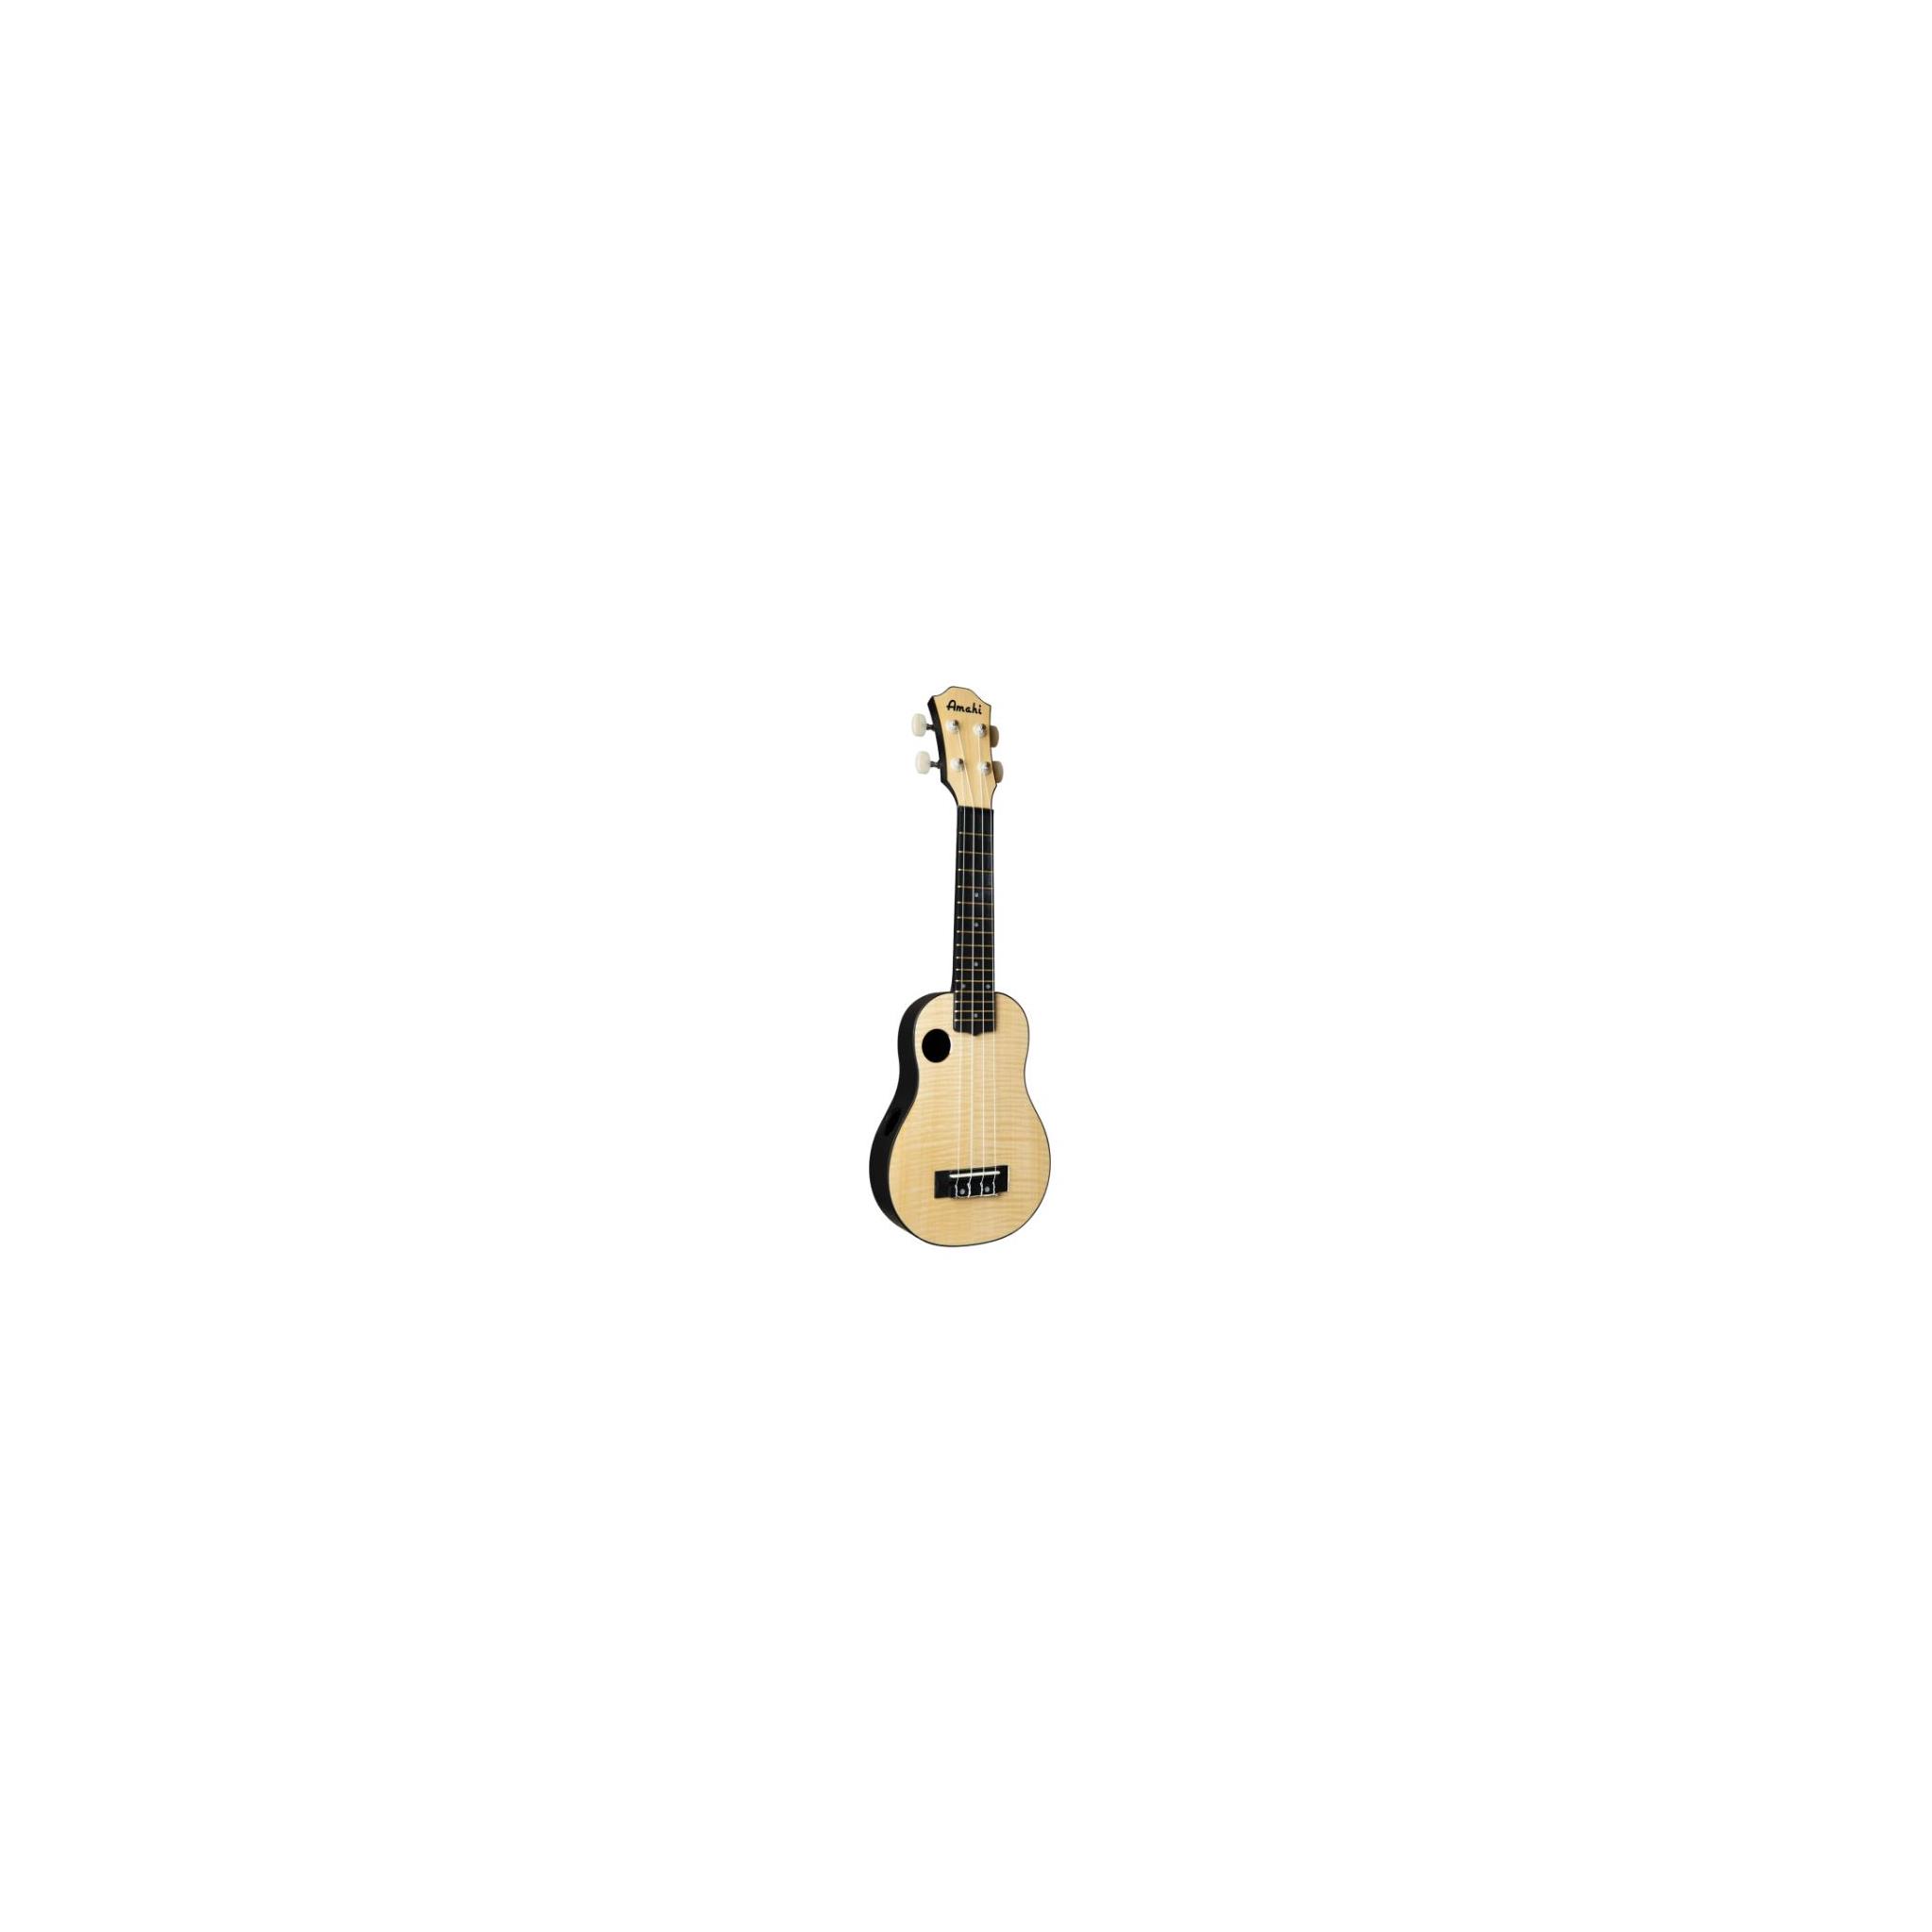 Amahi Soprano Troubador, Flamed Maple Top, Offset Soundhole HCLF550, w/ Bag